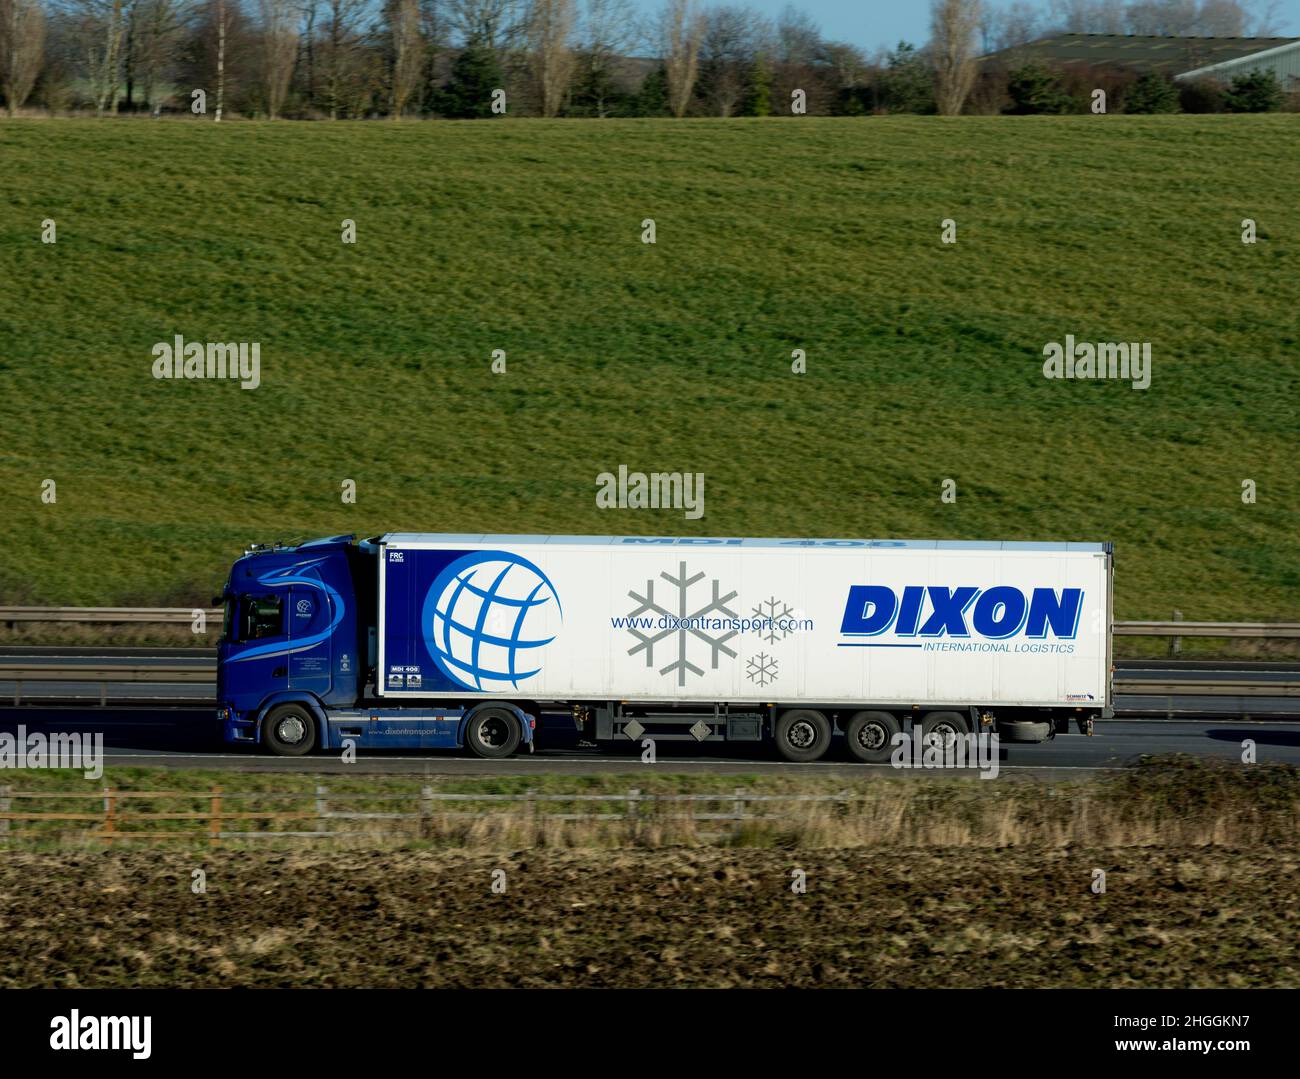 Dixon International lorry on the M40 motorway, Warwickshire, UK Stock Photo